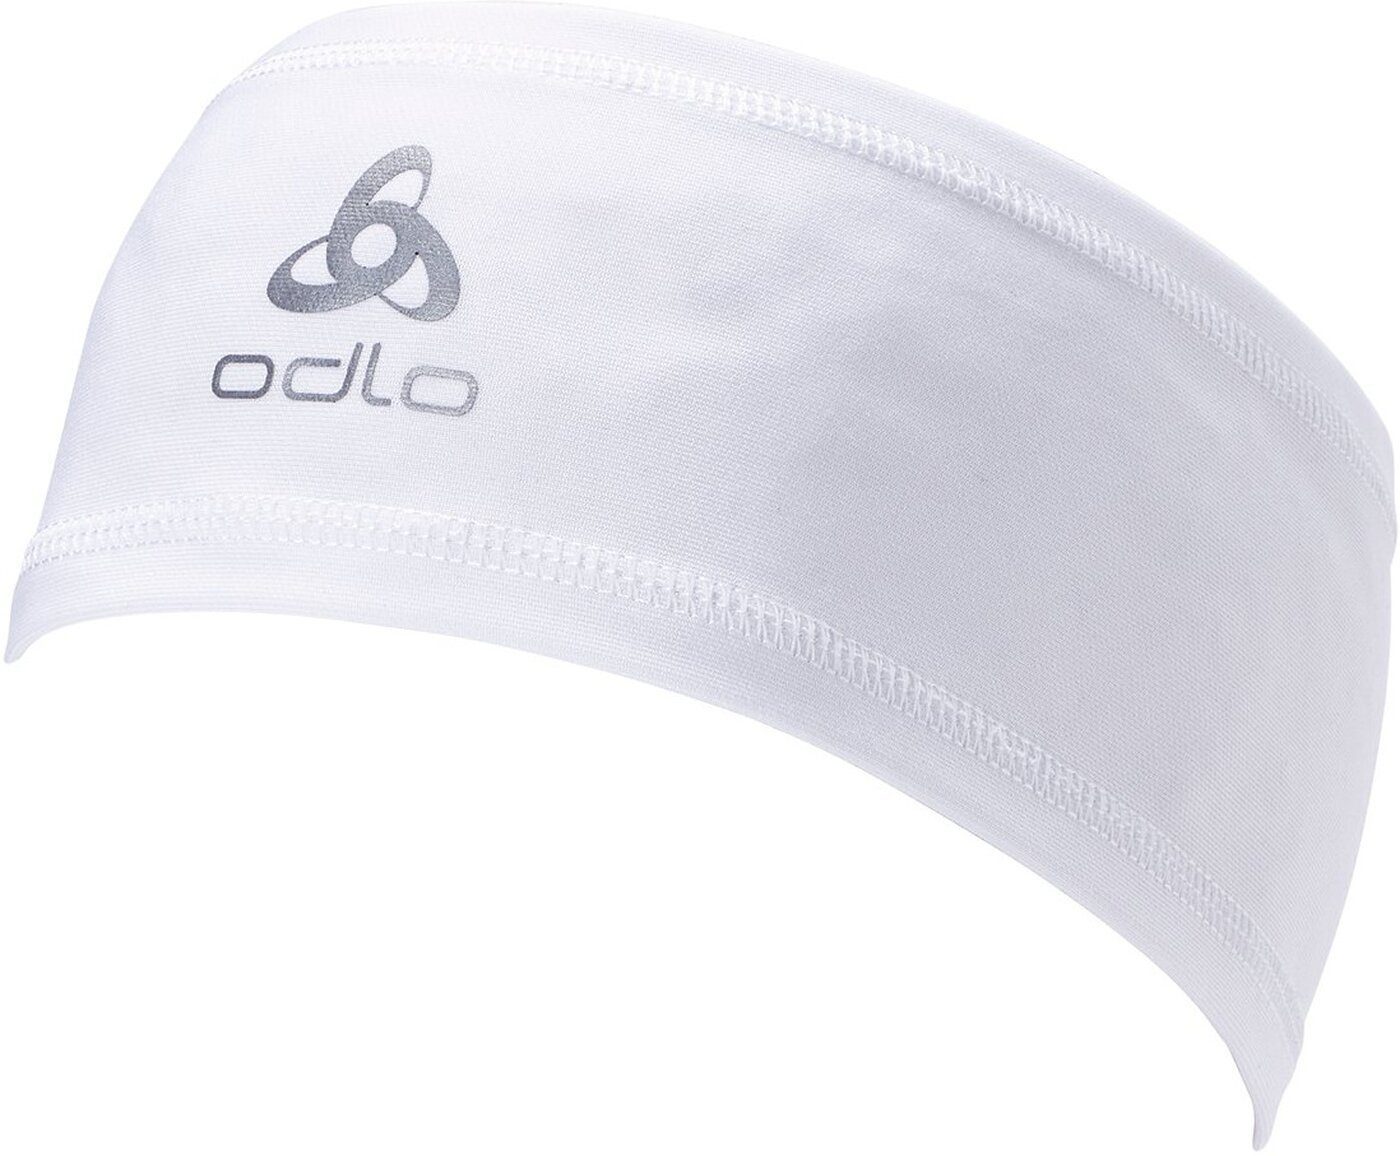 Odlo LIGHT POLYKNIT Headband 10000 ECO white Stirnband